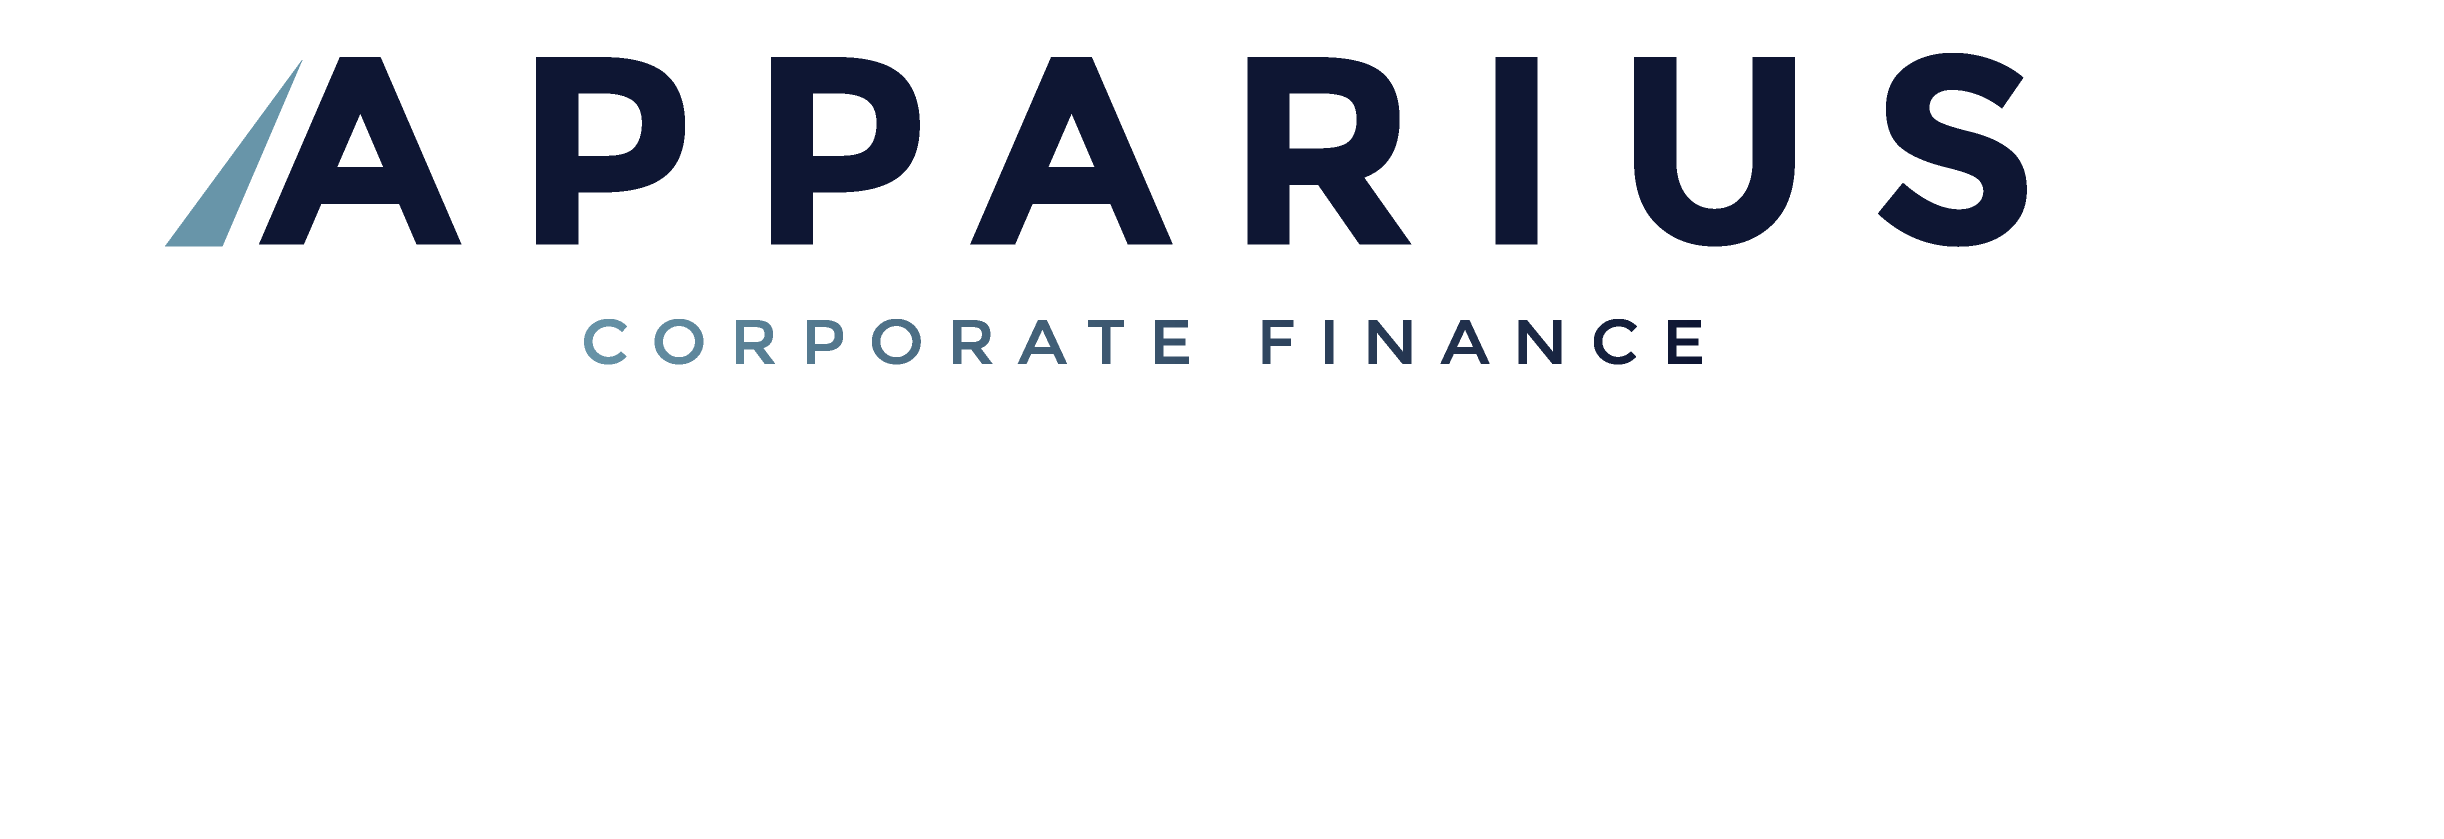 Apparius Corporate Finance